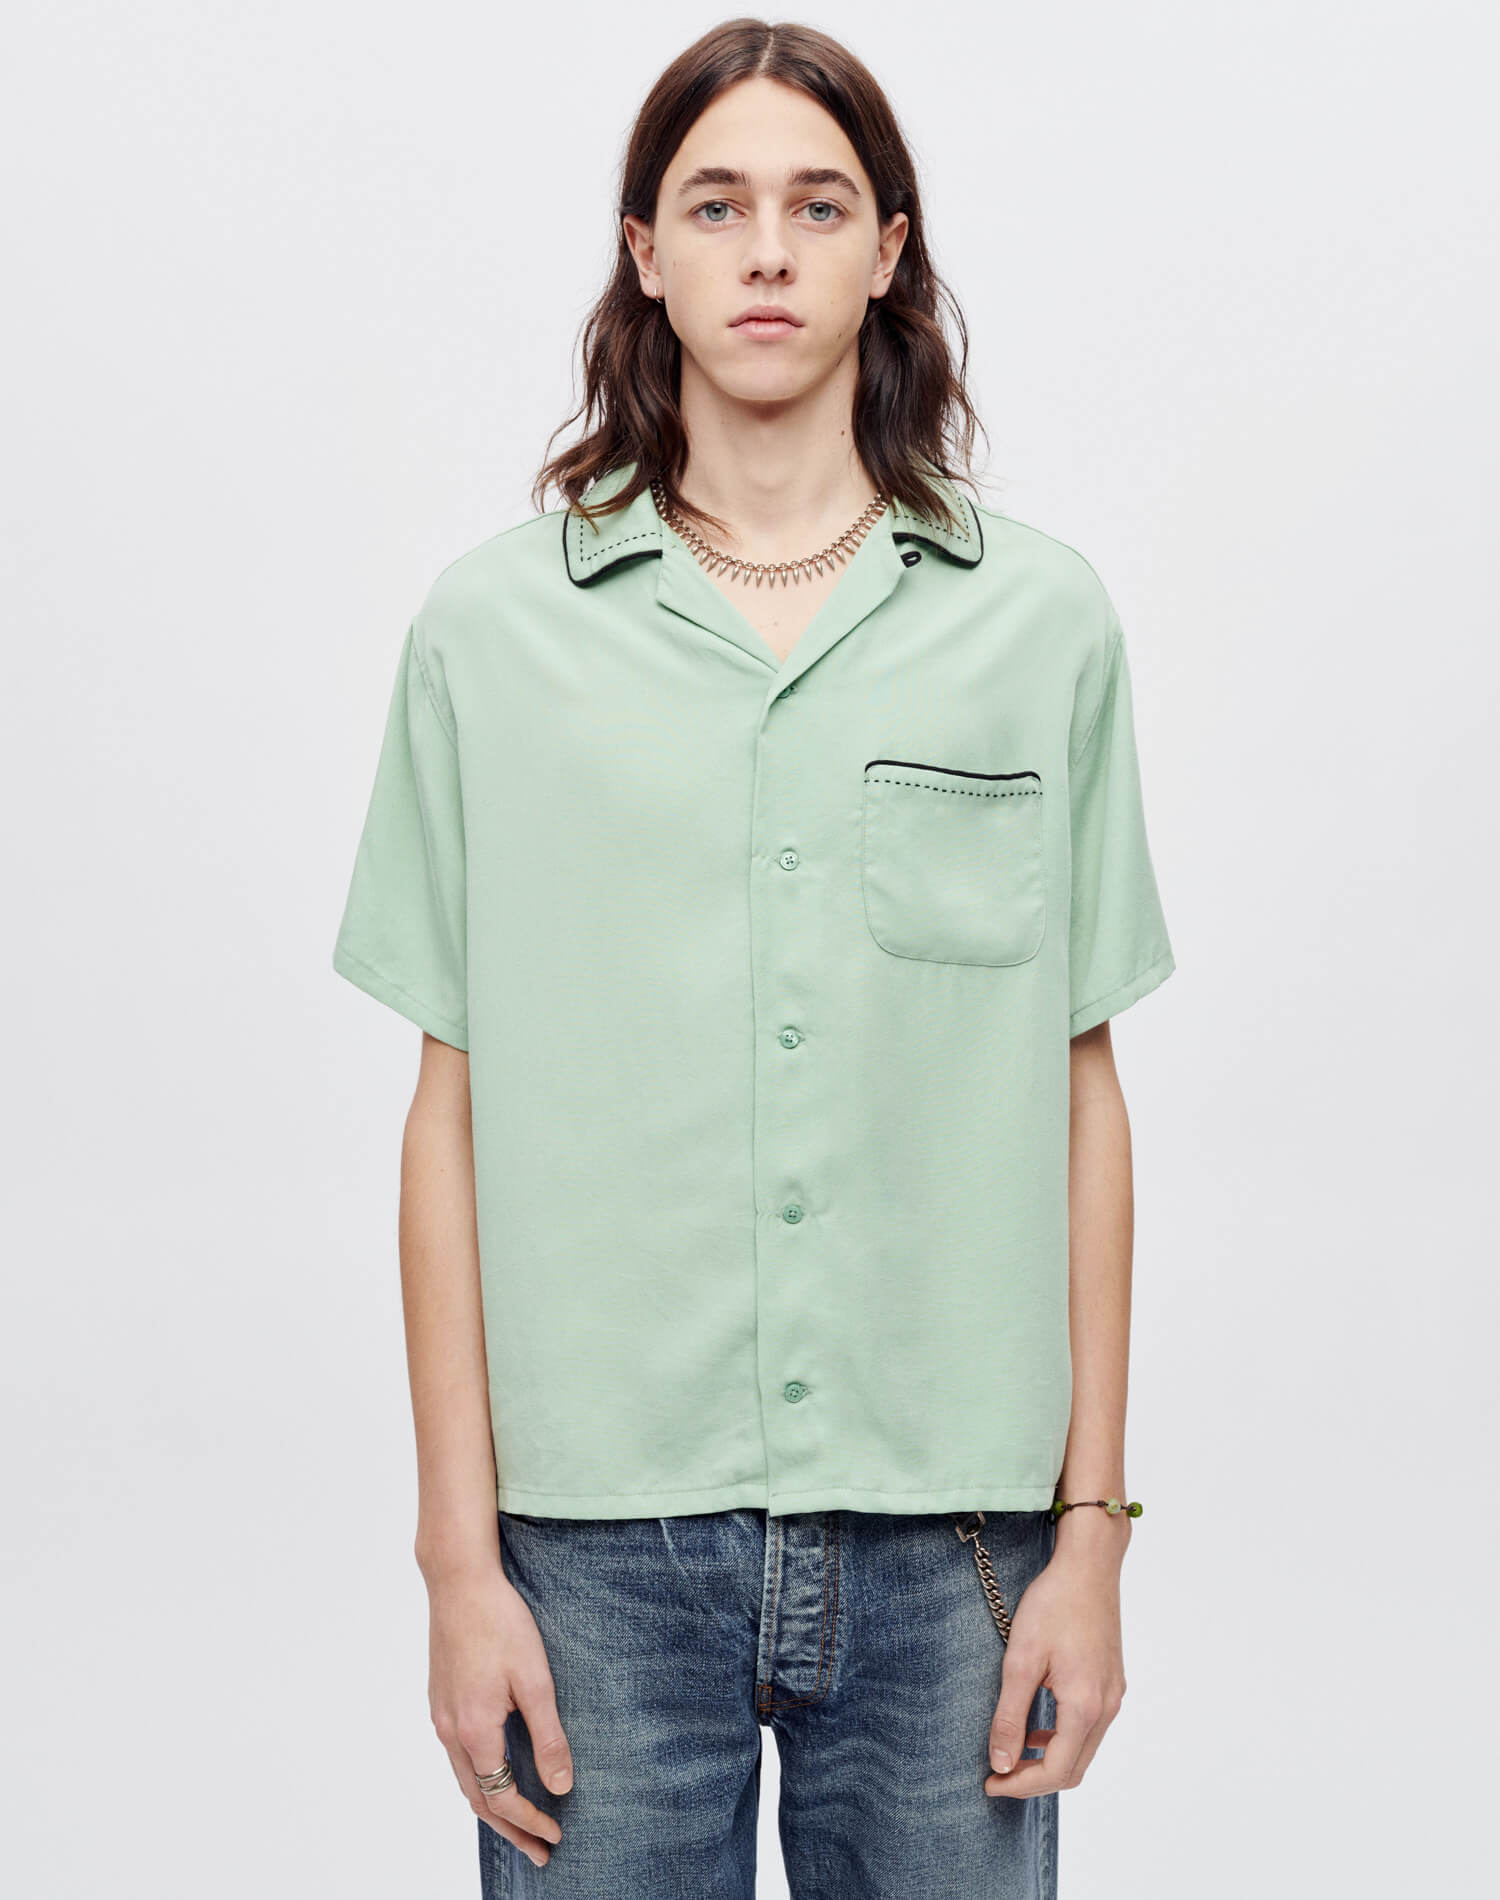 Sashiko Bowling Shirt - Pale Green